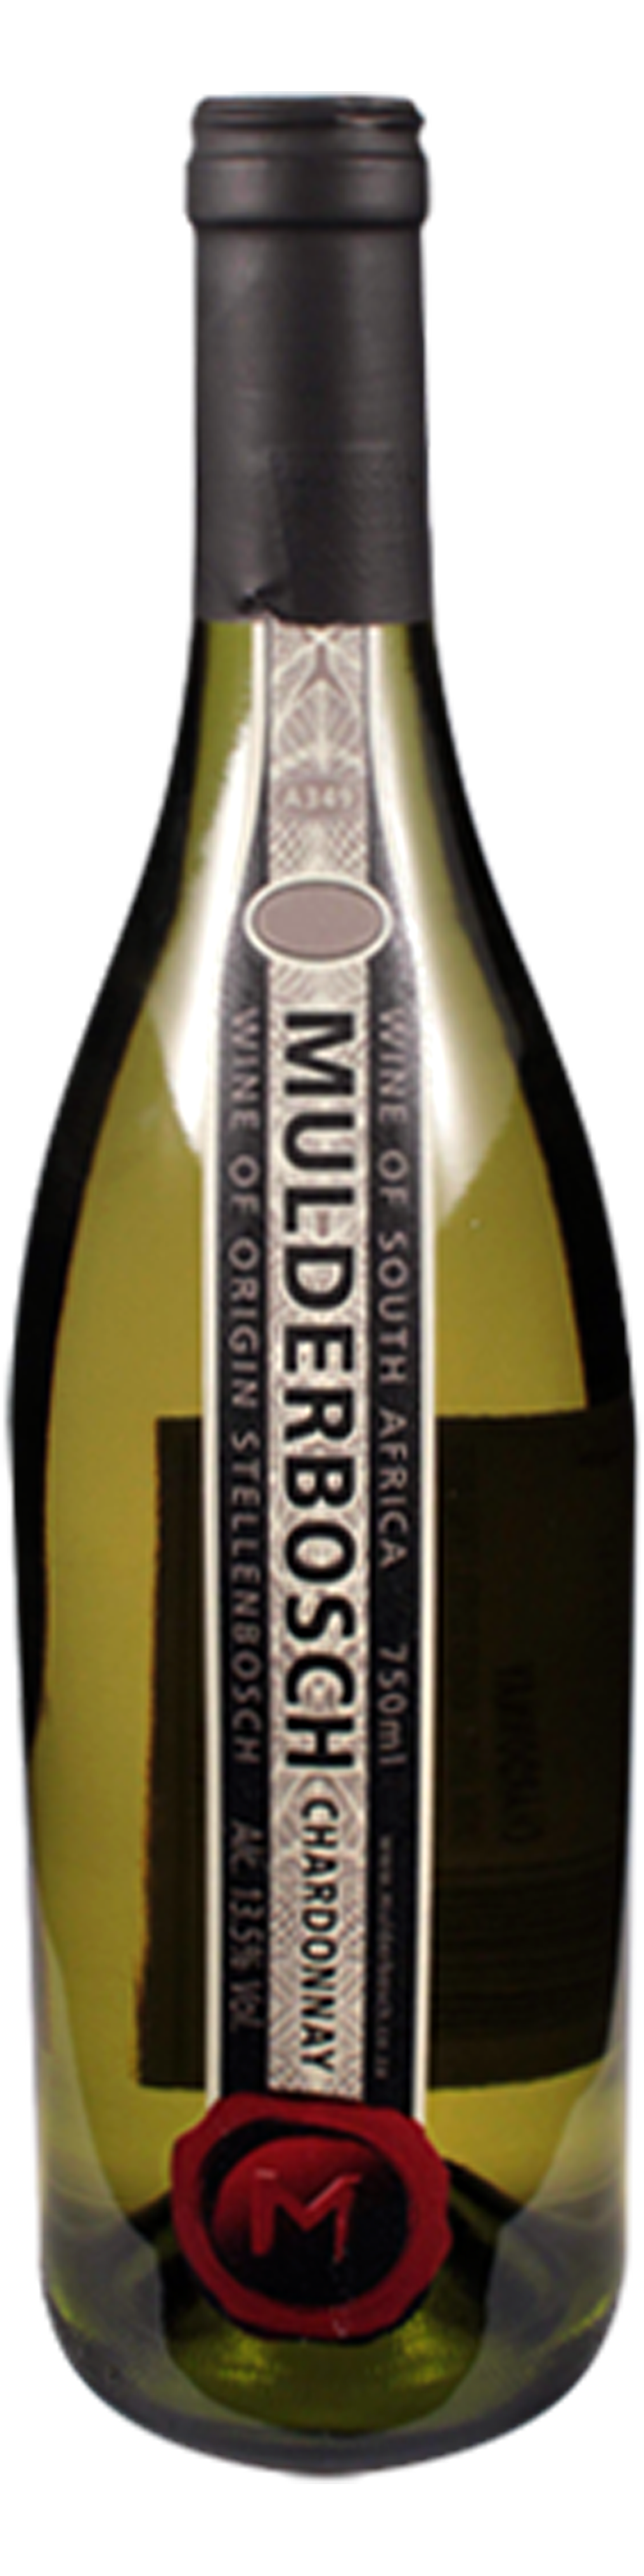 Bottle shot of 2013 Chardonnay